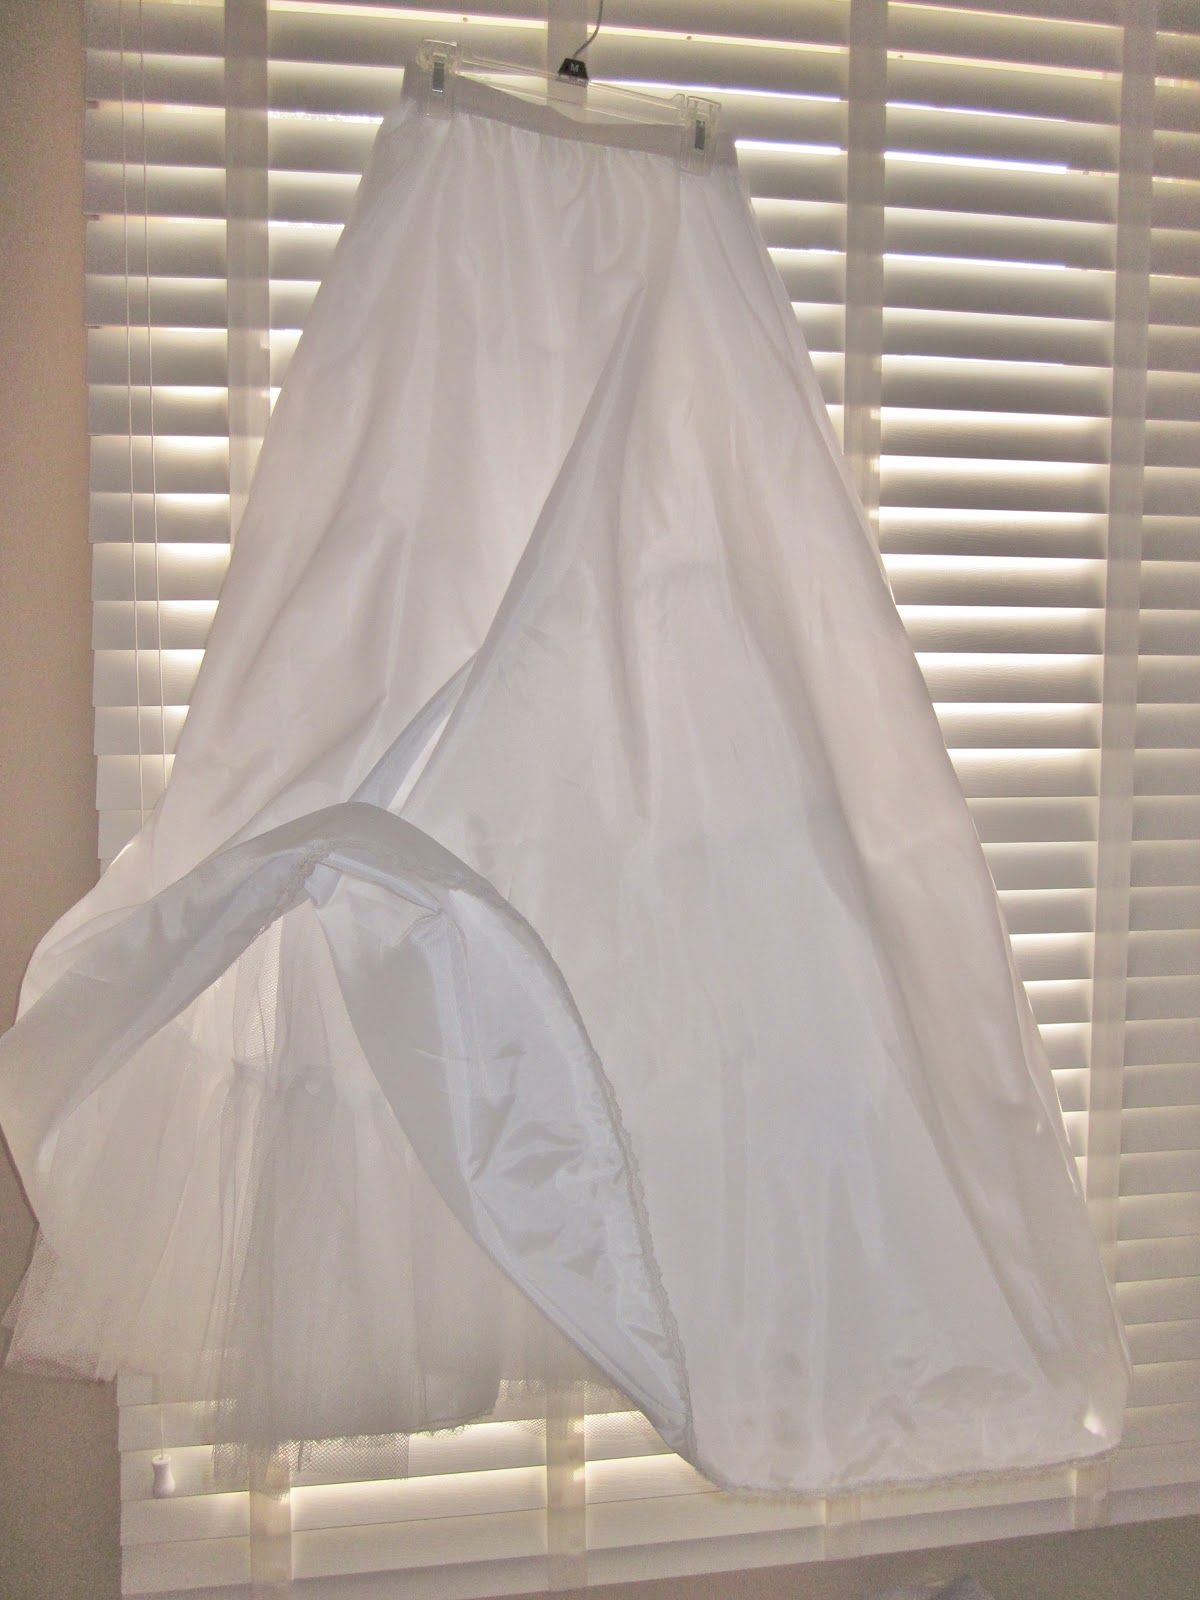 BonnieProjects: Wedding Dress Wednesday: The Undergarments